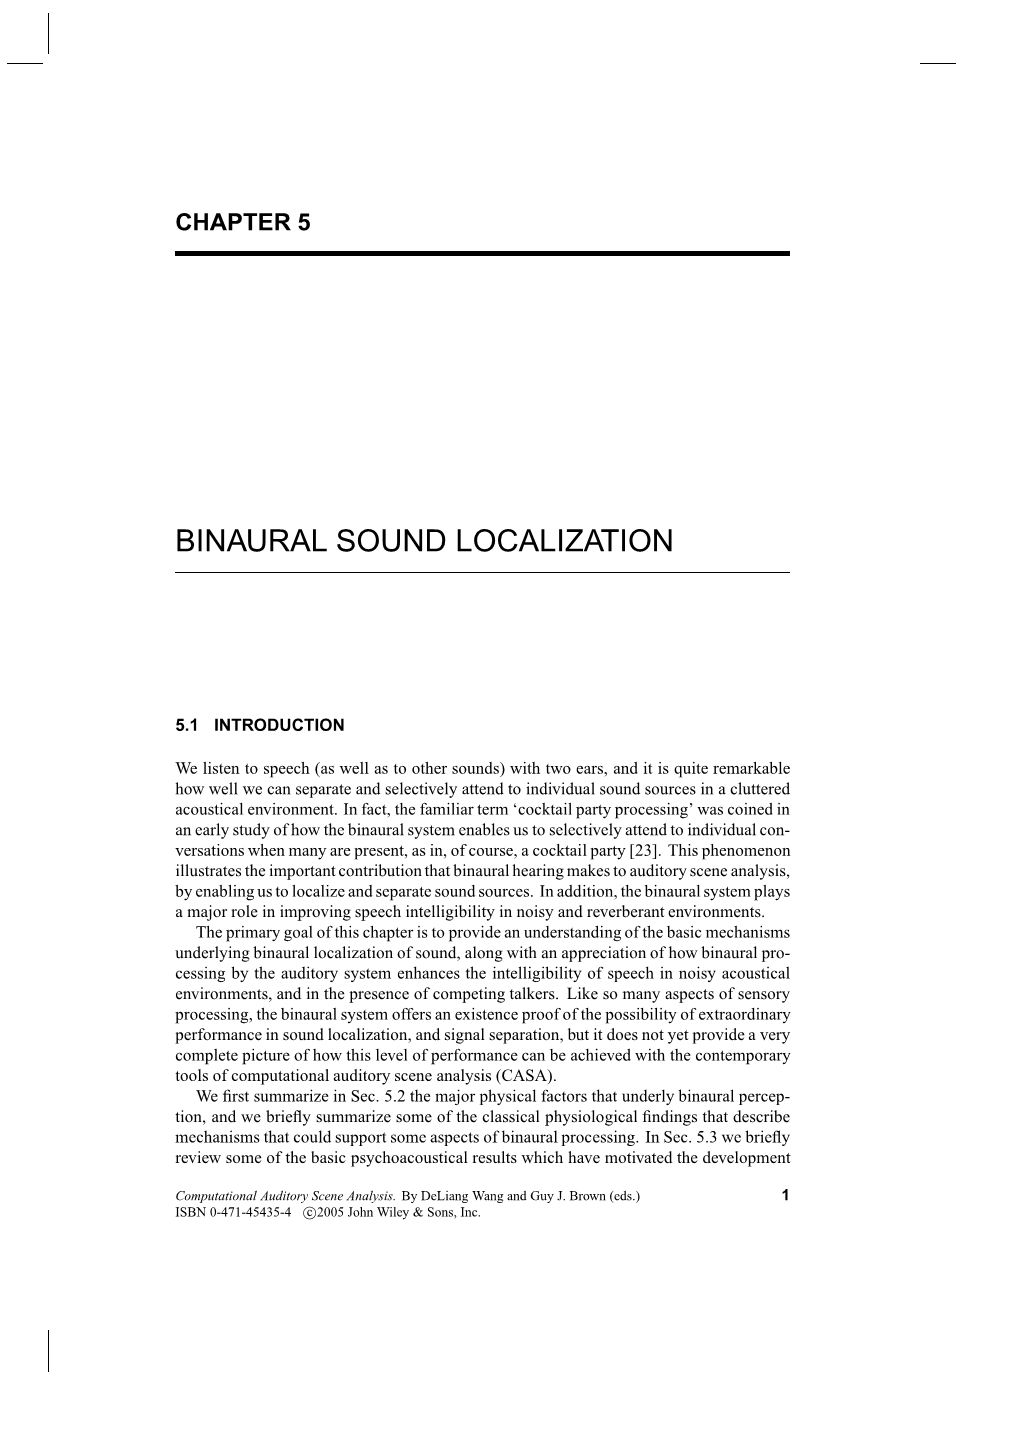 Binaural Sound Localization